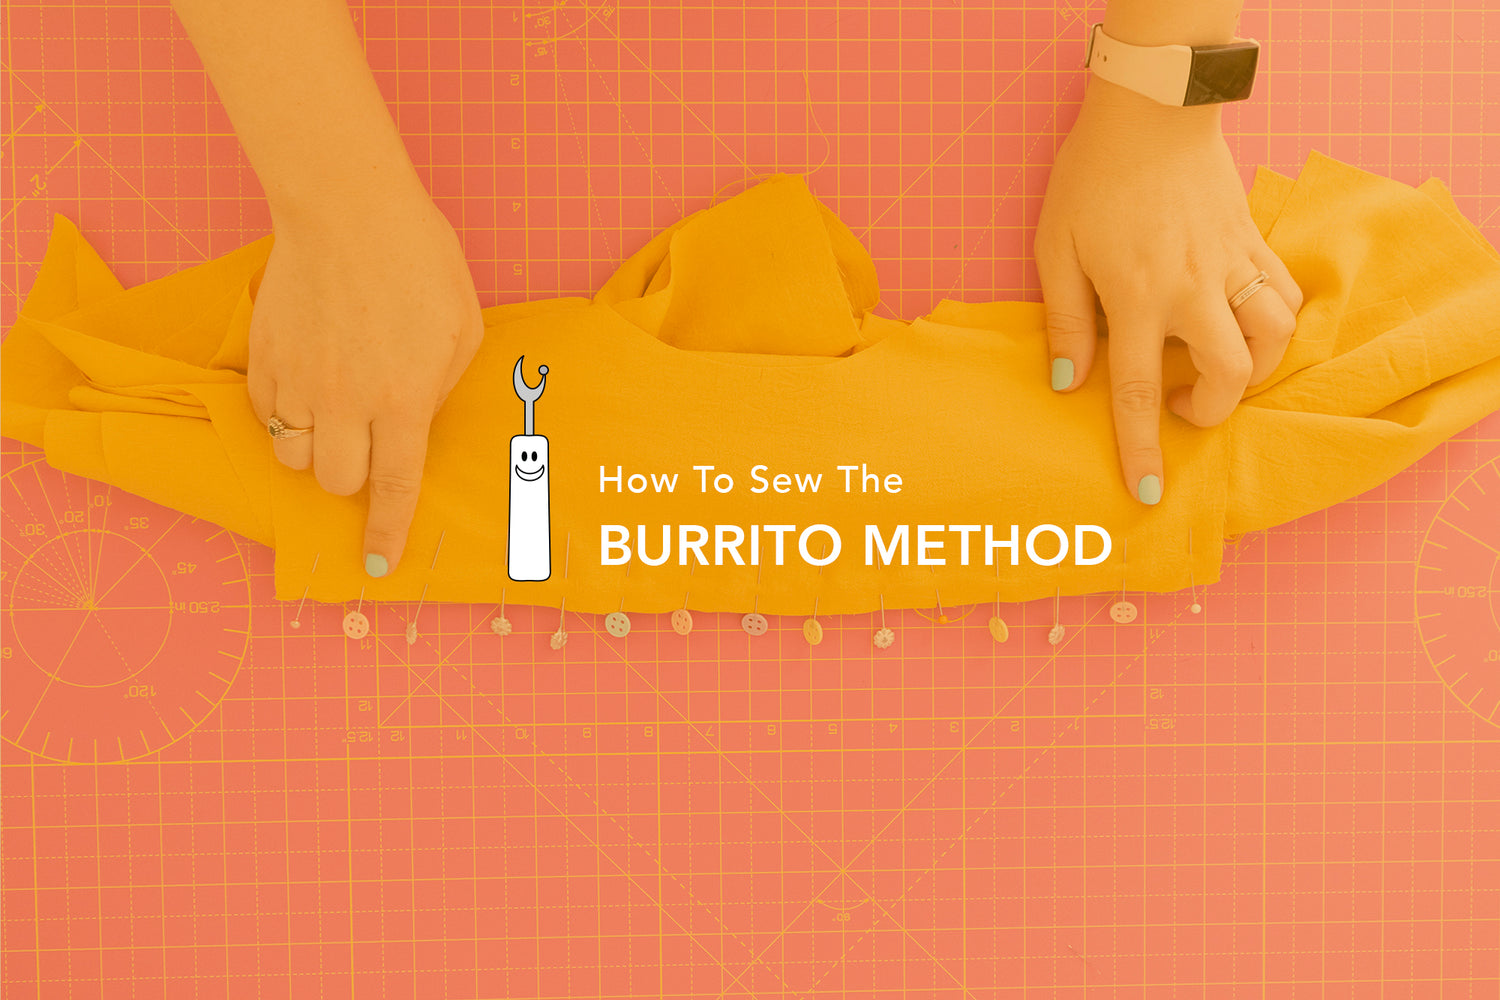 How to sew the Burrito Method